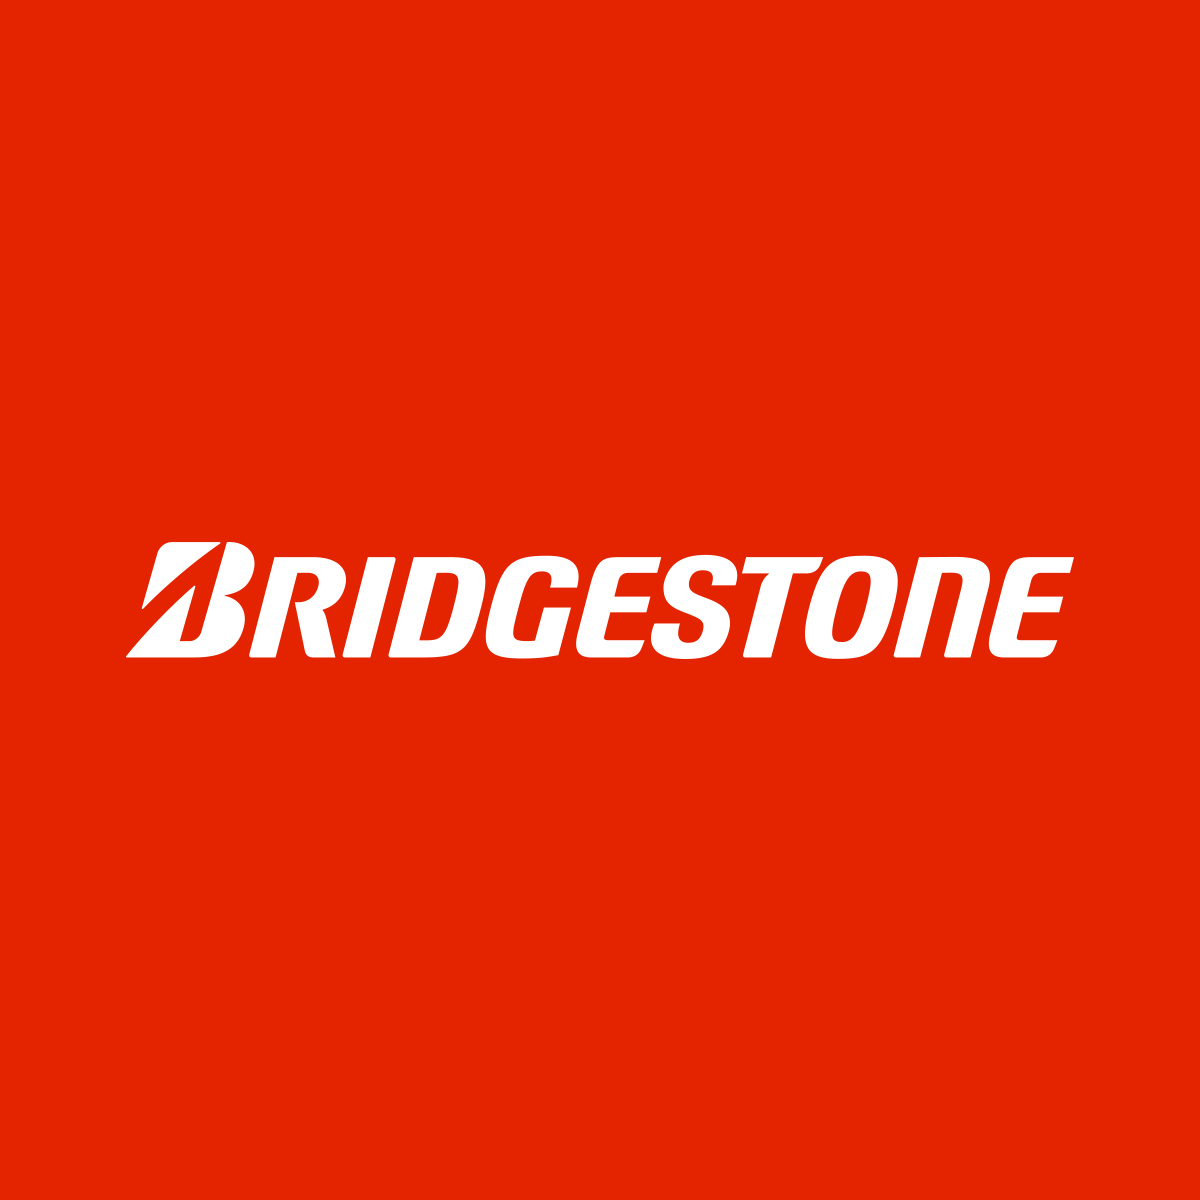 Bridgestone Expands Its Olympics Association Till 2024